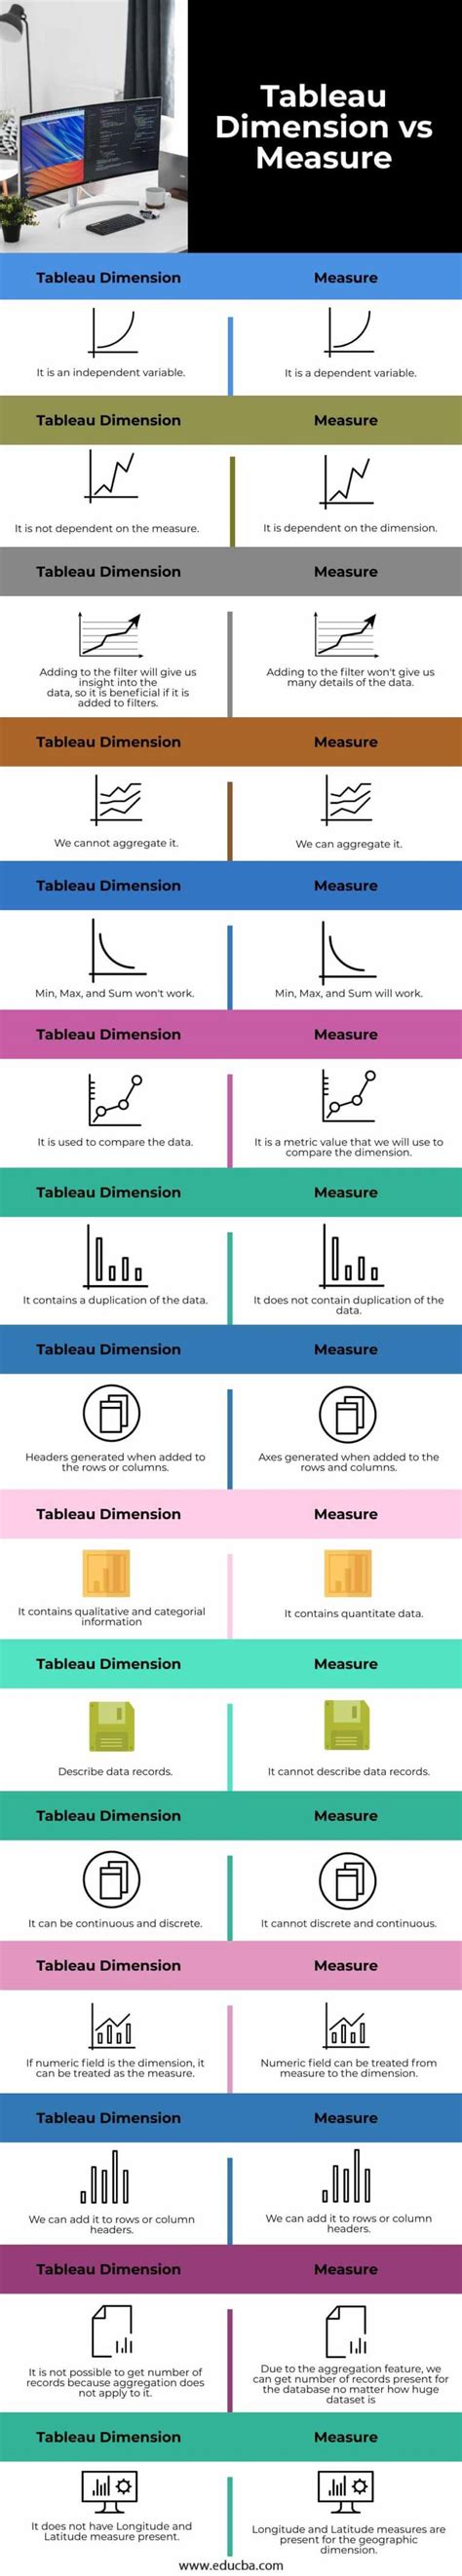 Tableau Dimension Vs Measure Learn The Major Key Differeces